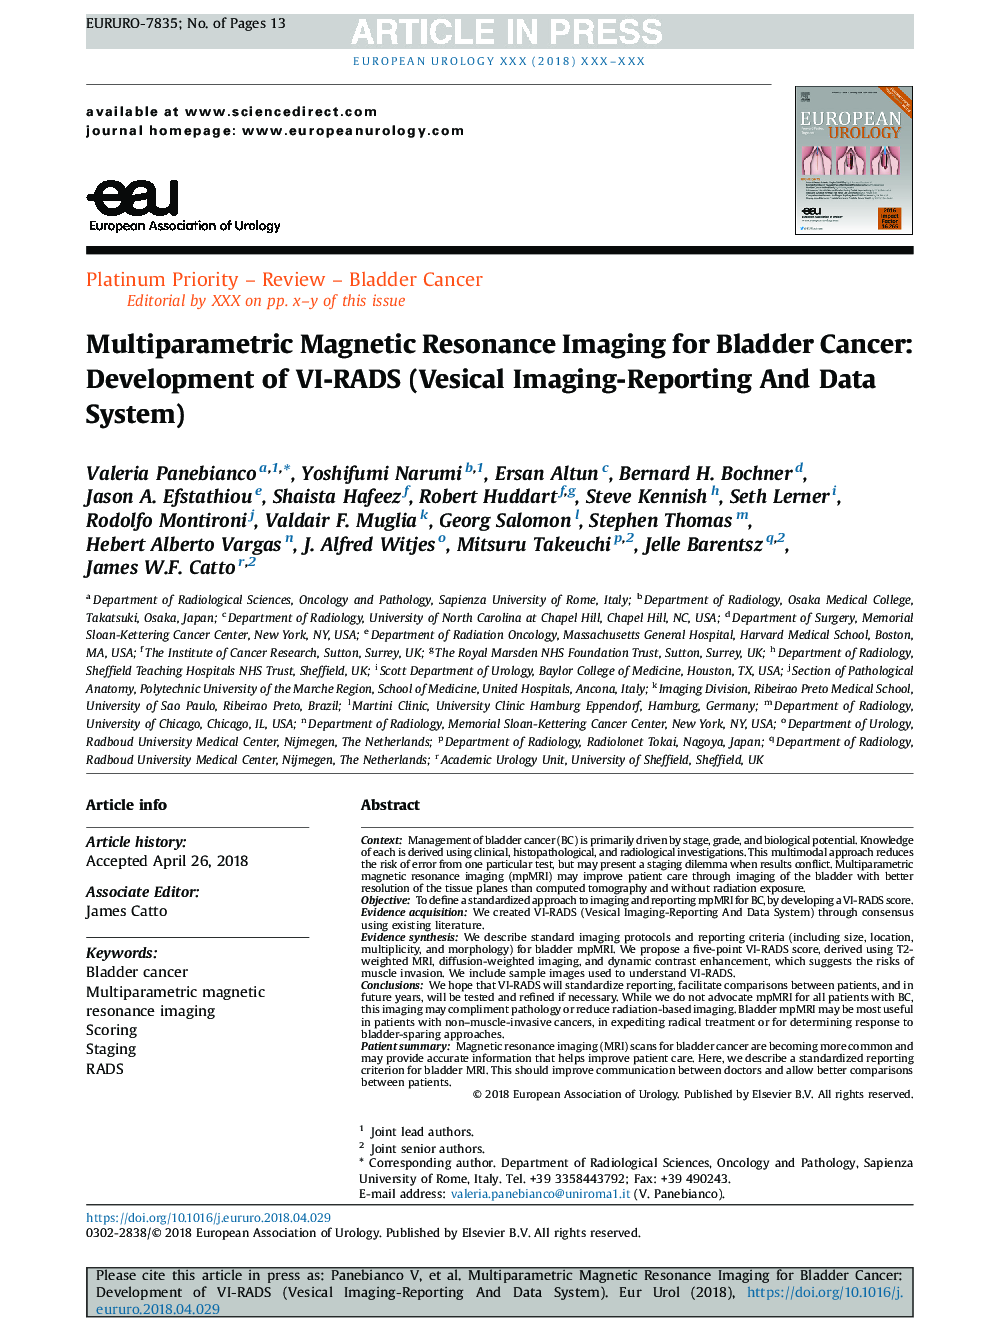 Multiparametric Magnetic Resonance Imaging for Bladder Cancer: Development of VI-RADS (Vesical Imaging-Reporting And Data System)